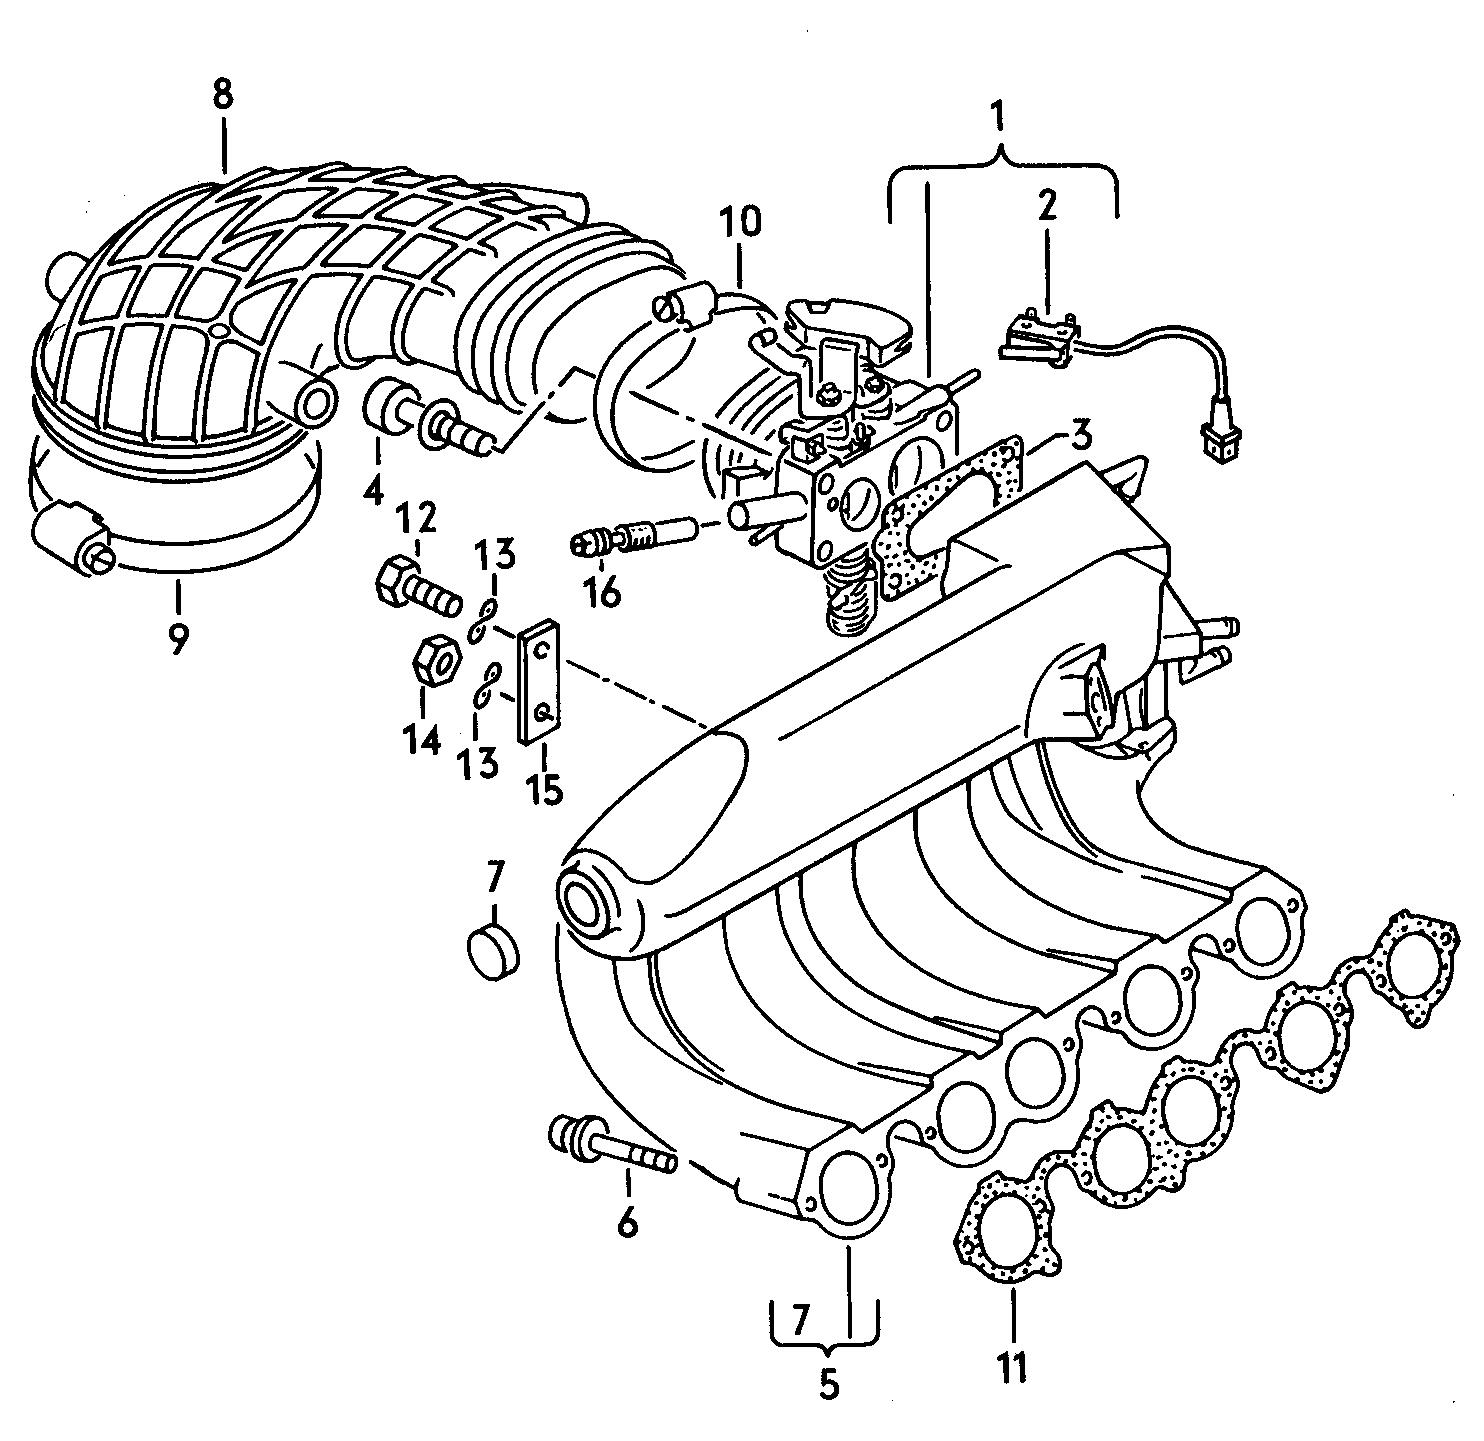 throttle valve adapterIntake manifold 2.23ltr. - Audi 100 - a10